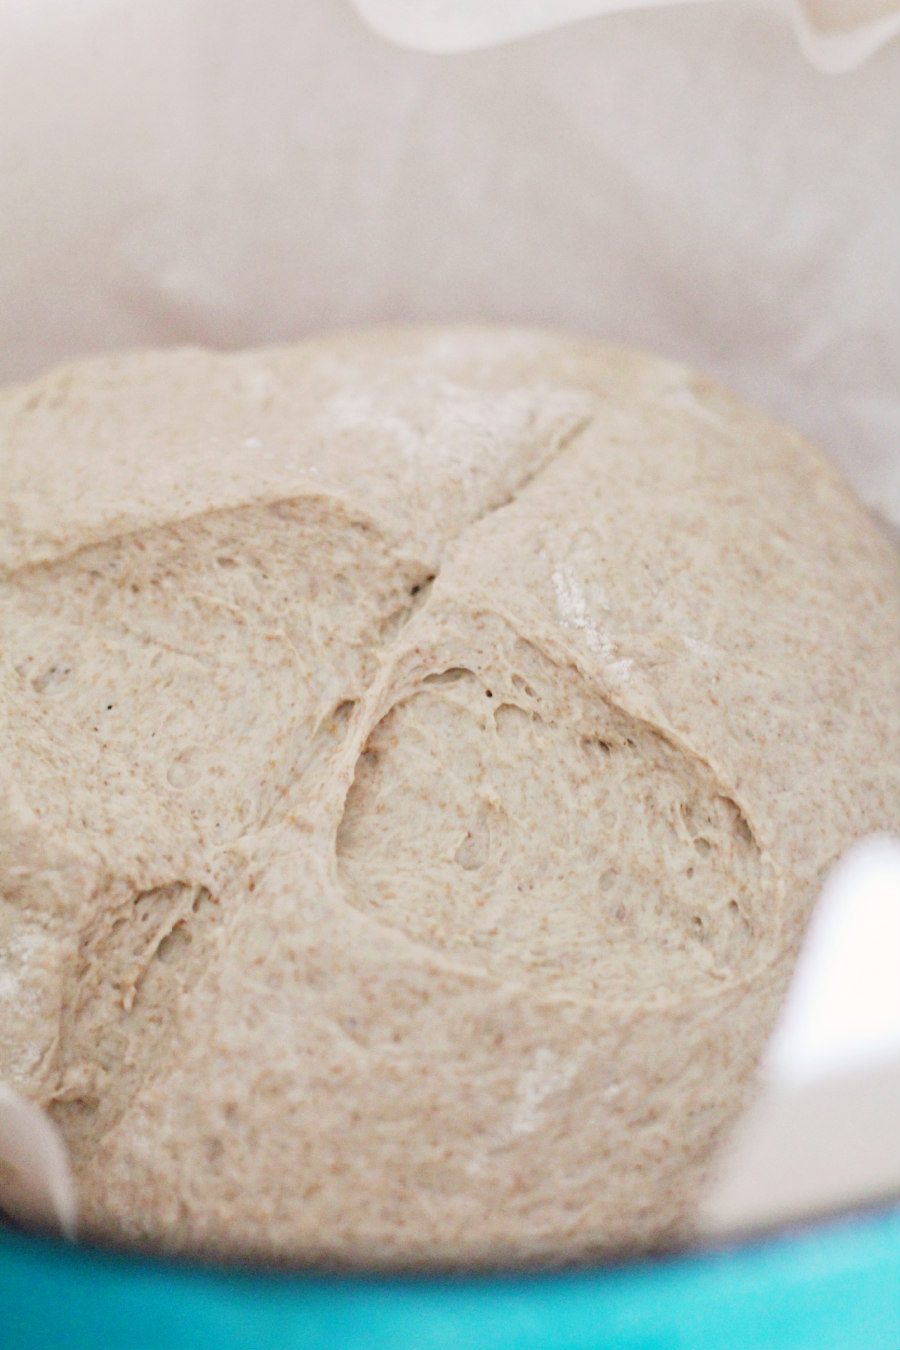 Half whole wheat bread dough on parchment paper, inside Dutch oven.